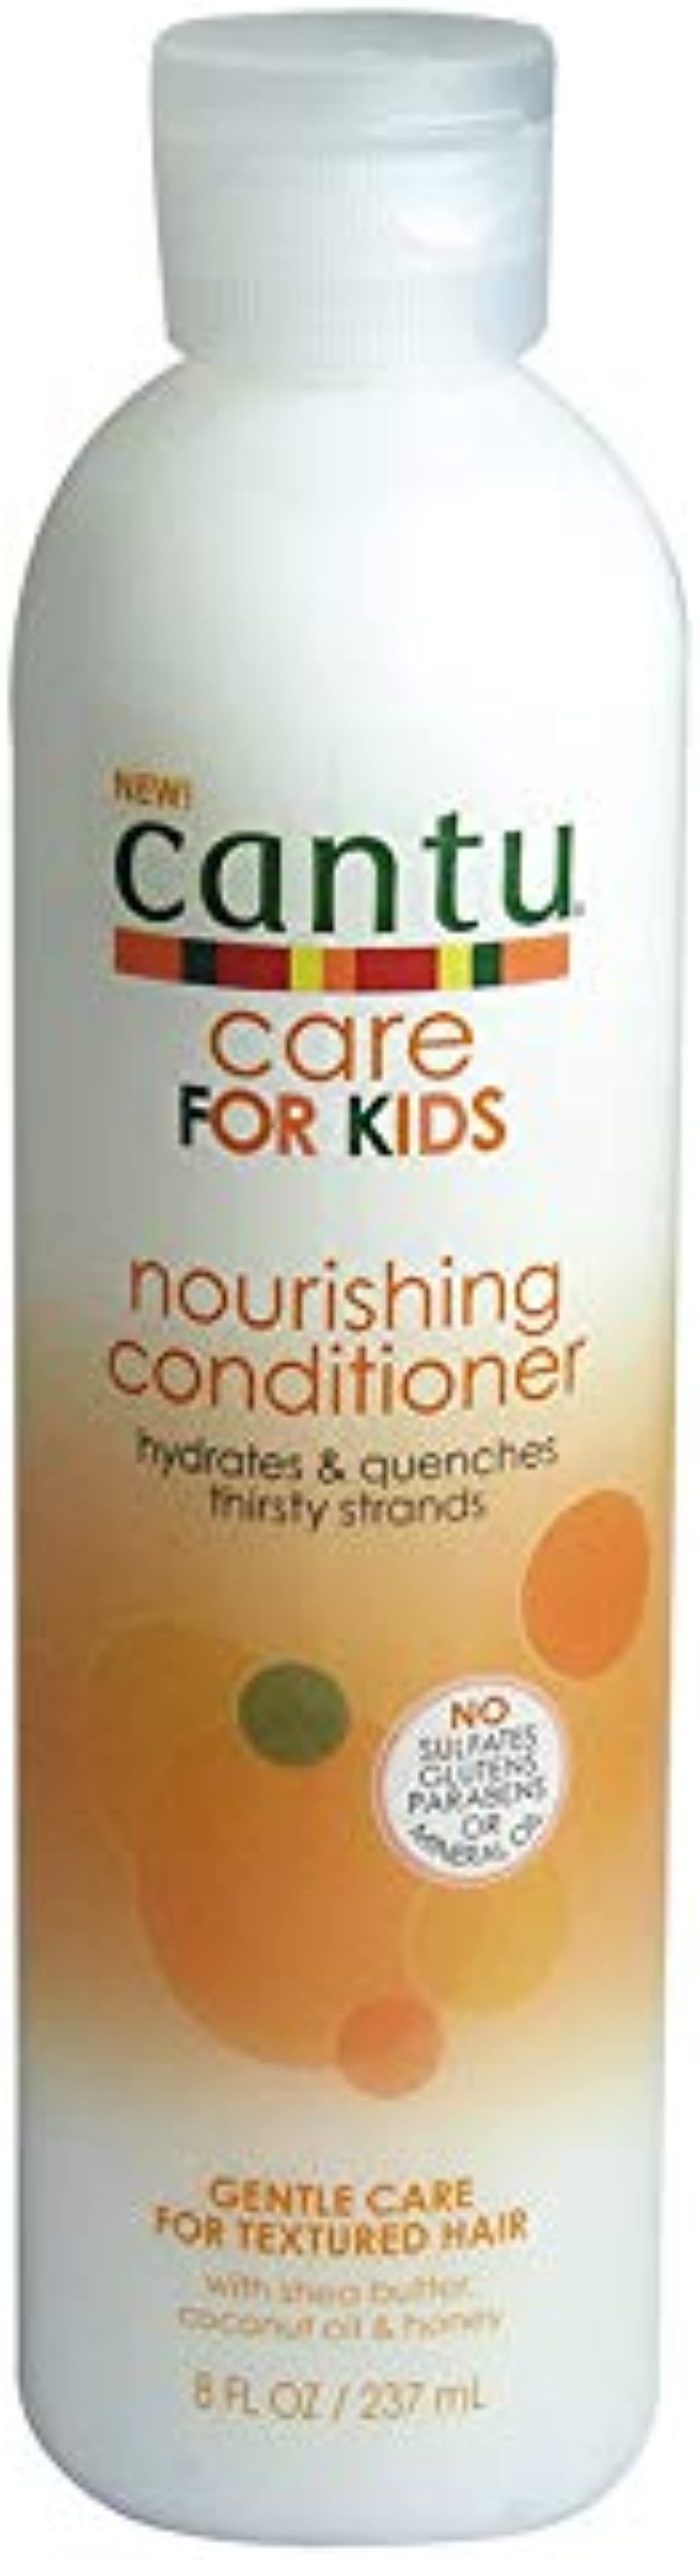 Cantu Care for Kids Nourishing Shampoo & Conditioner Duo